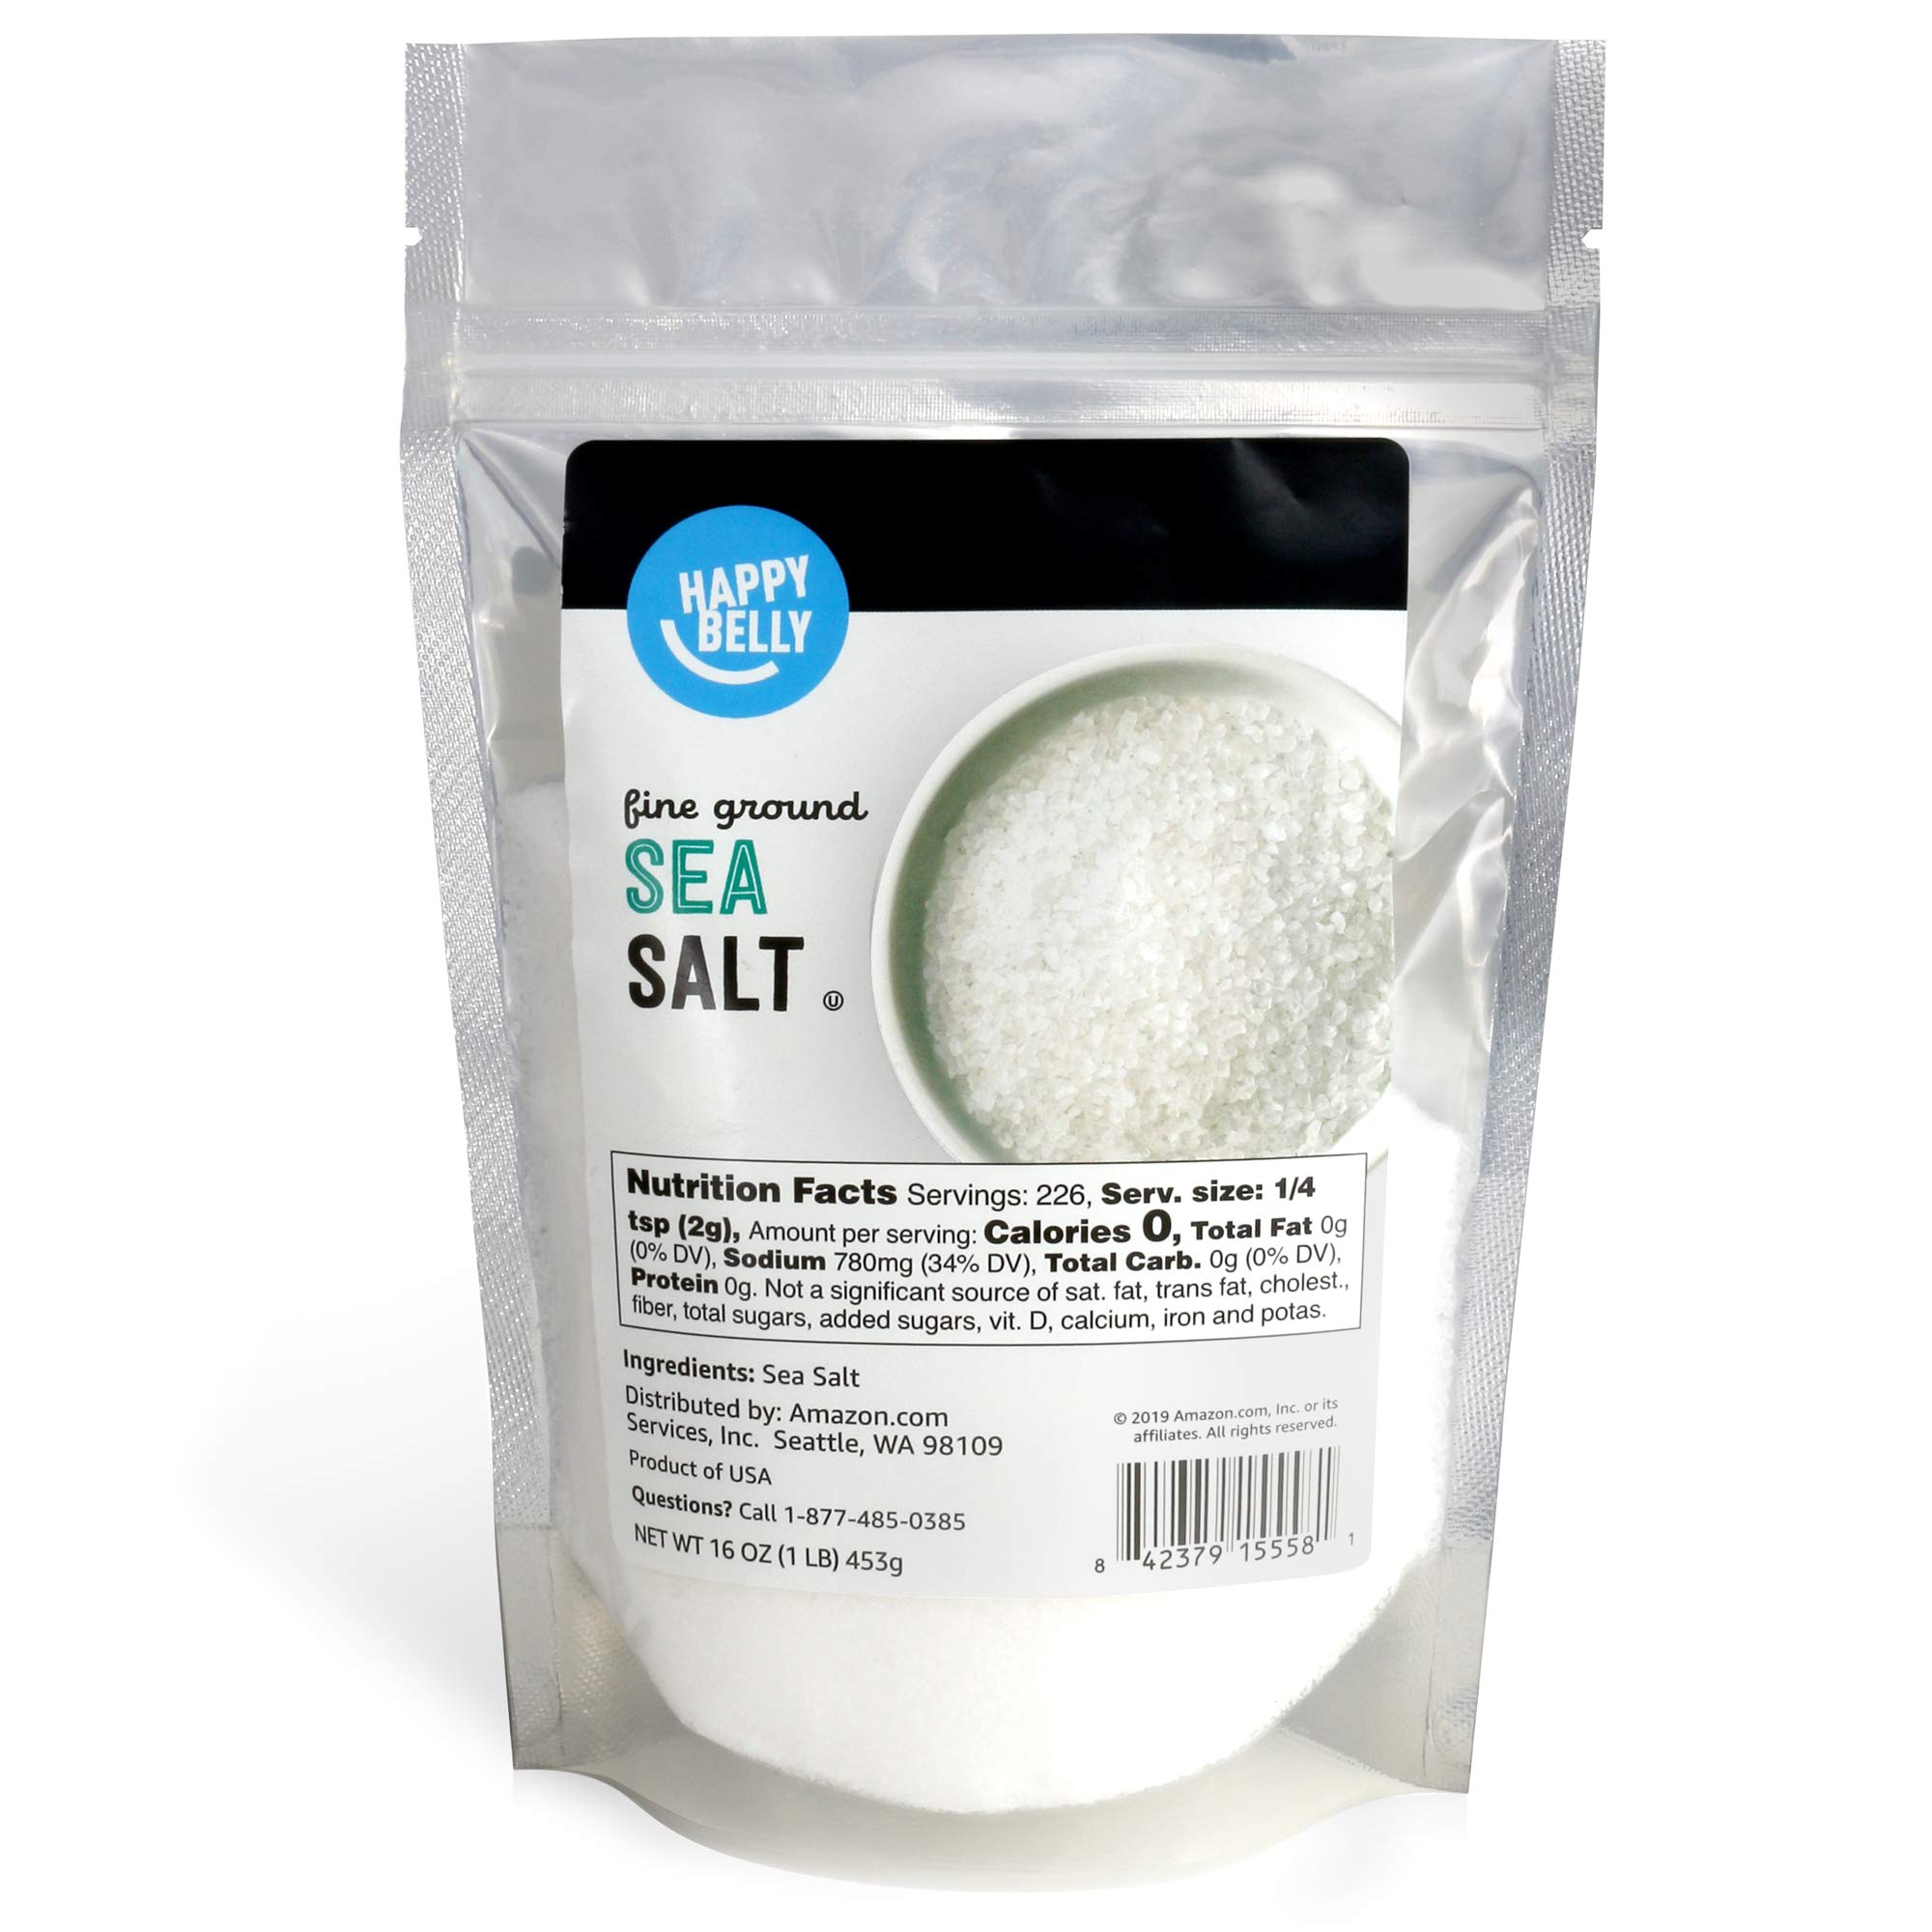 Happy Belly Salt & Pepper Set $2